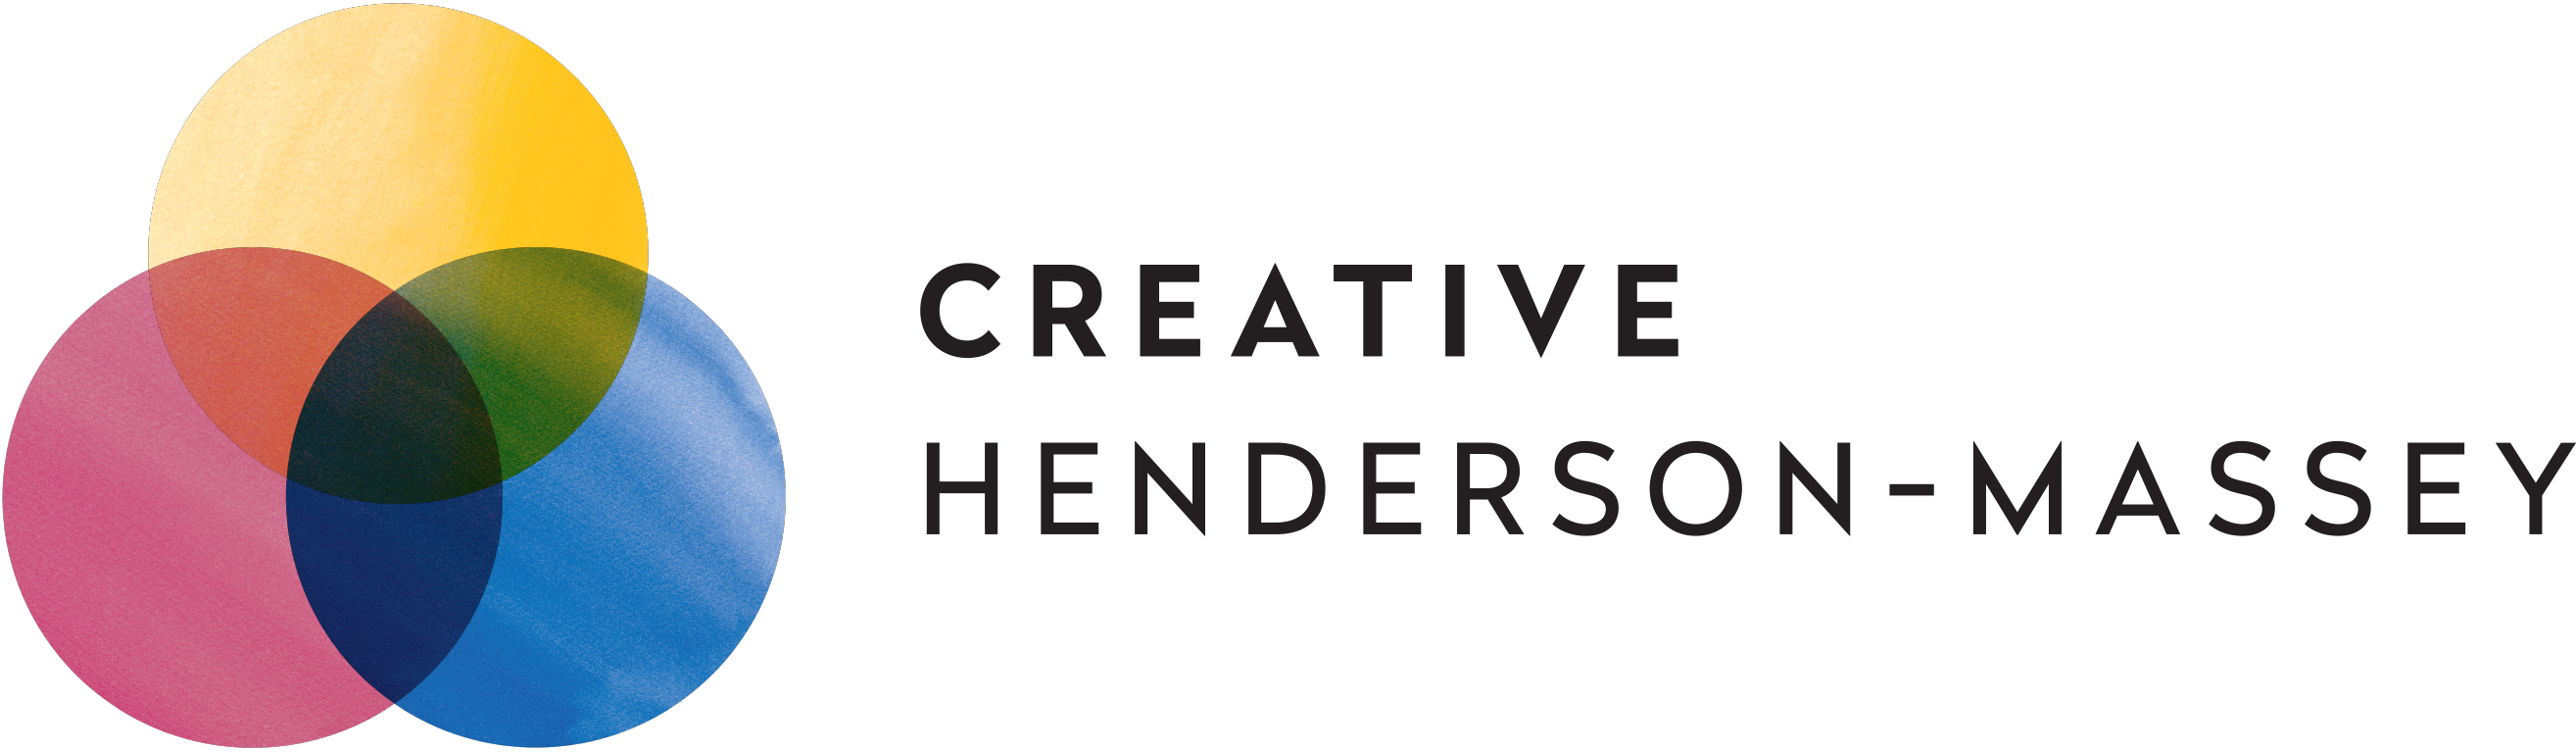 Creative Henderson-Massey logo RGB (1)